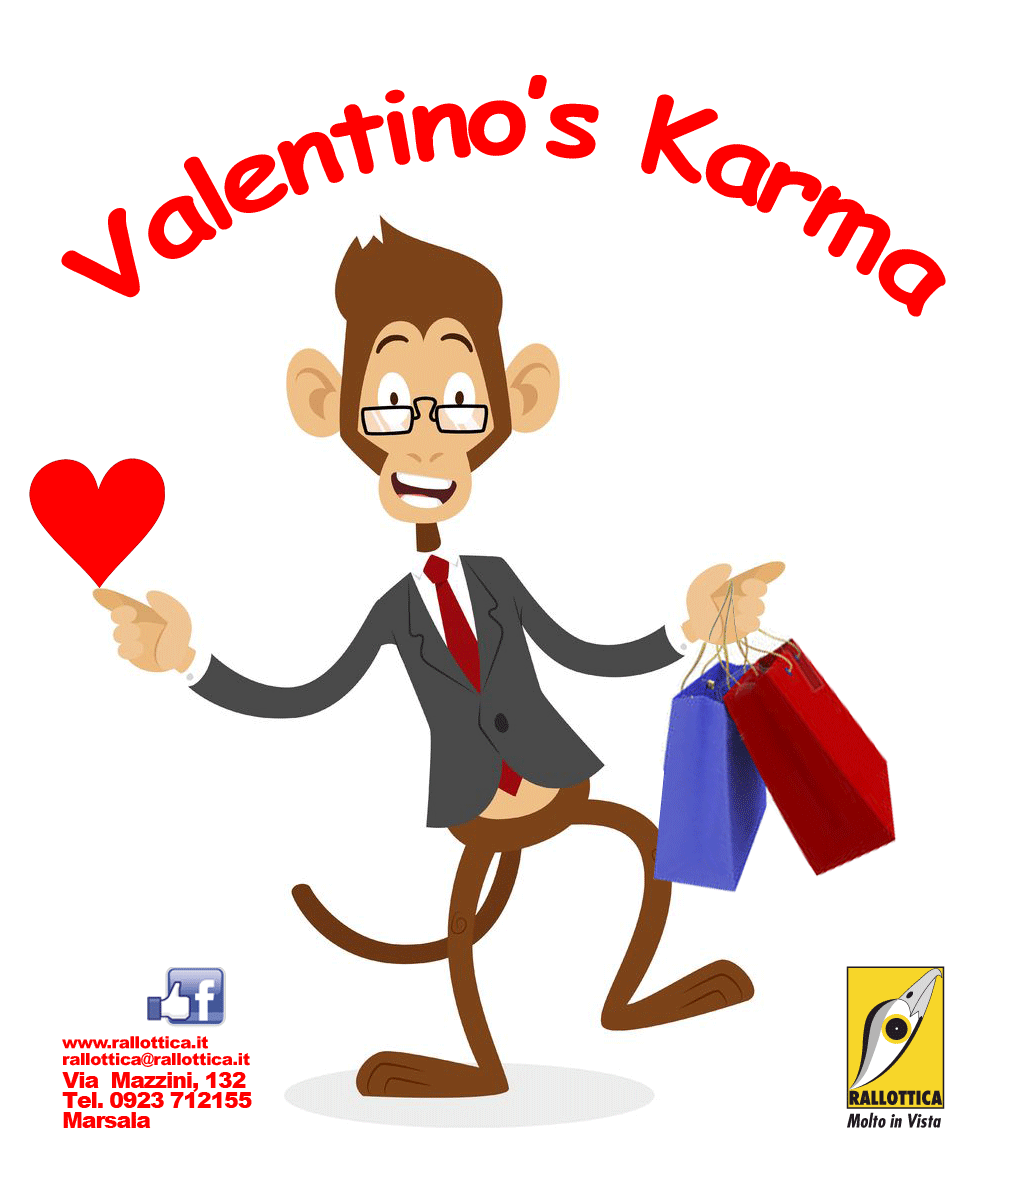 Valentino's Karma